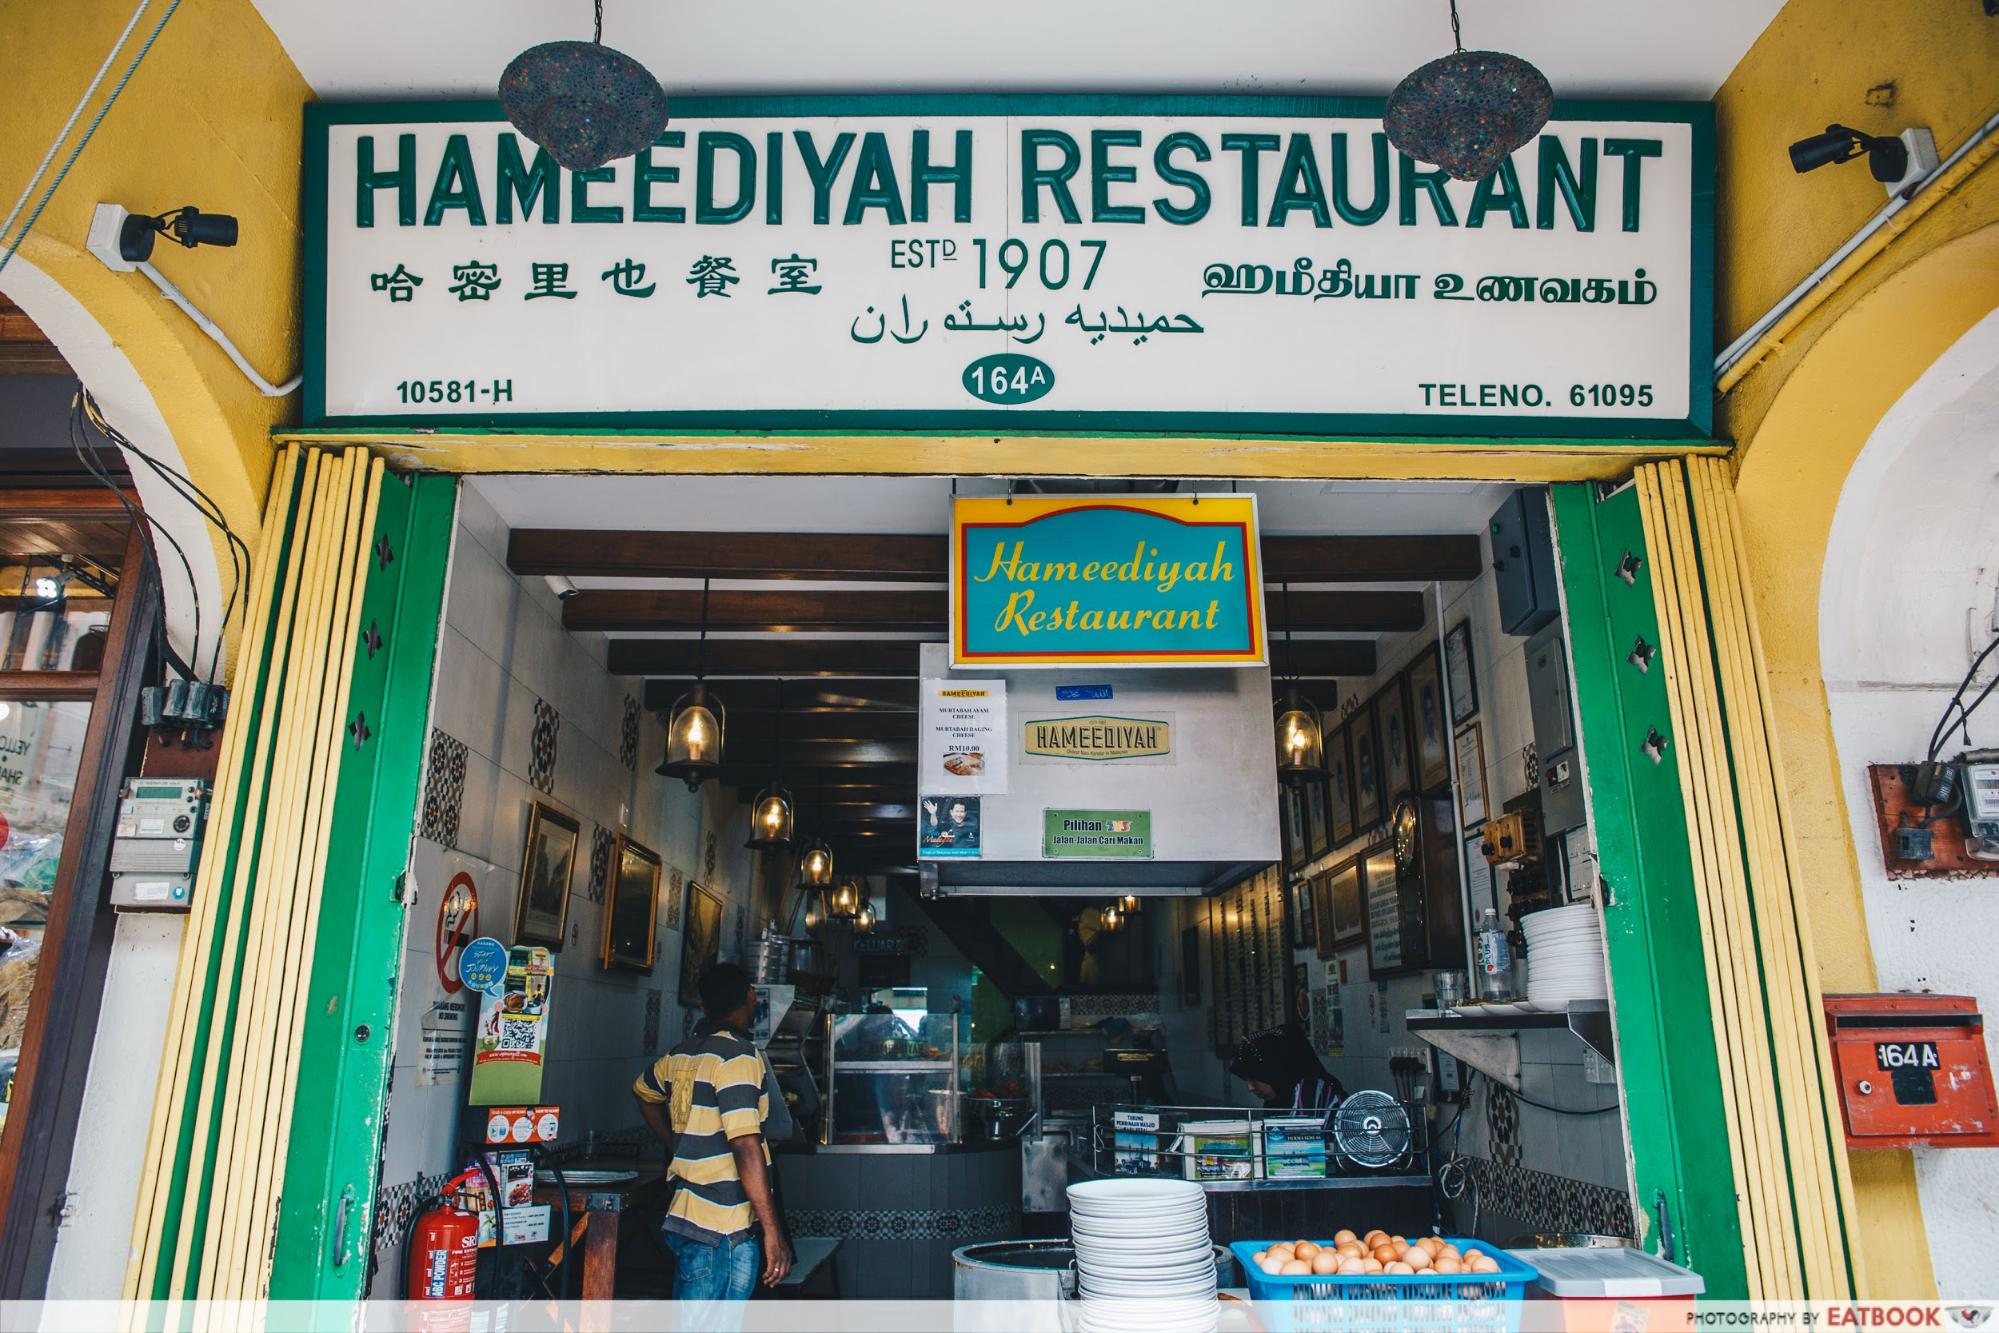 Penang Hawker Food - Hameediyah Restaurant